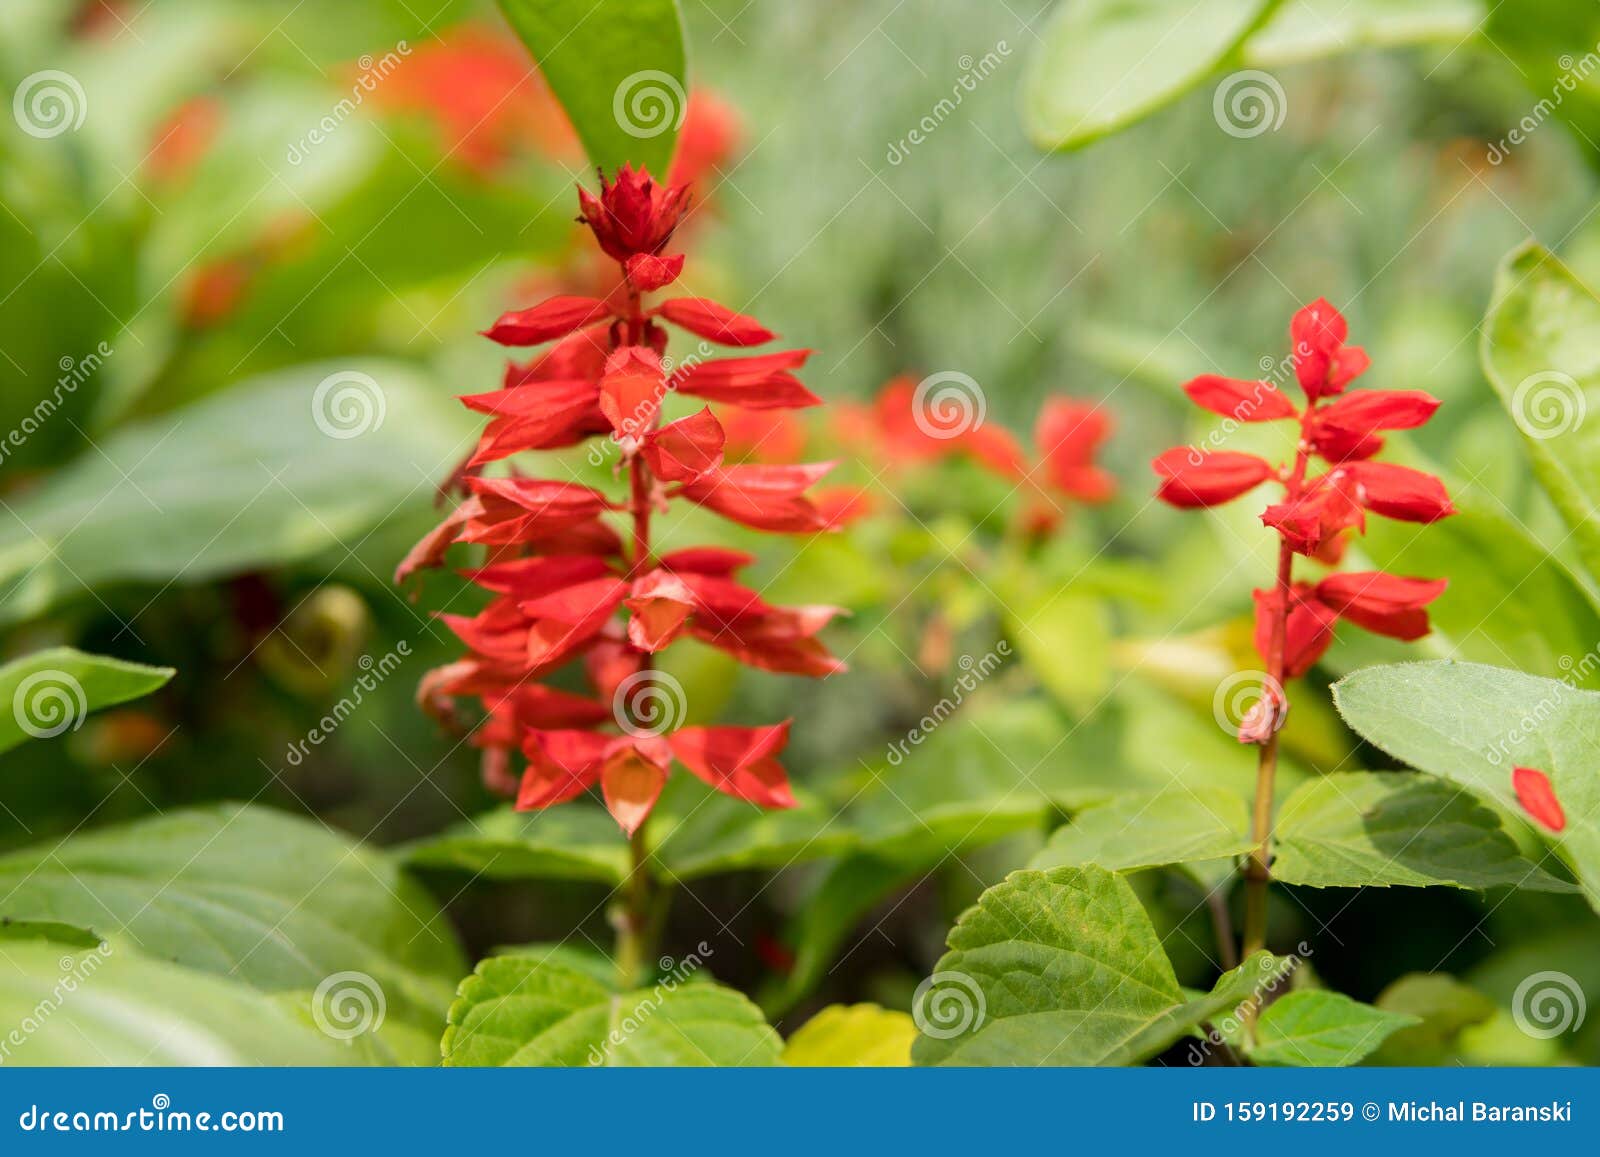 red salvia flowers